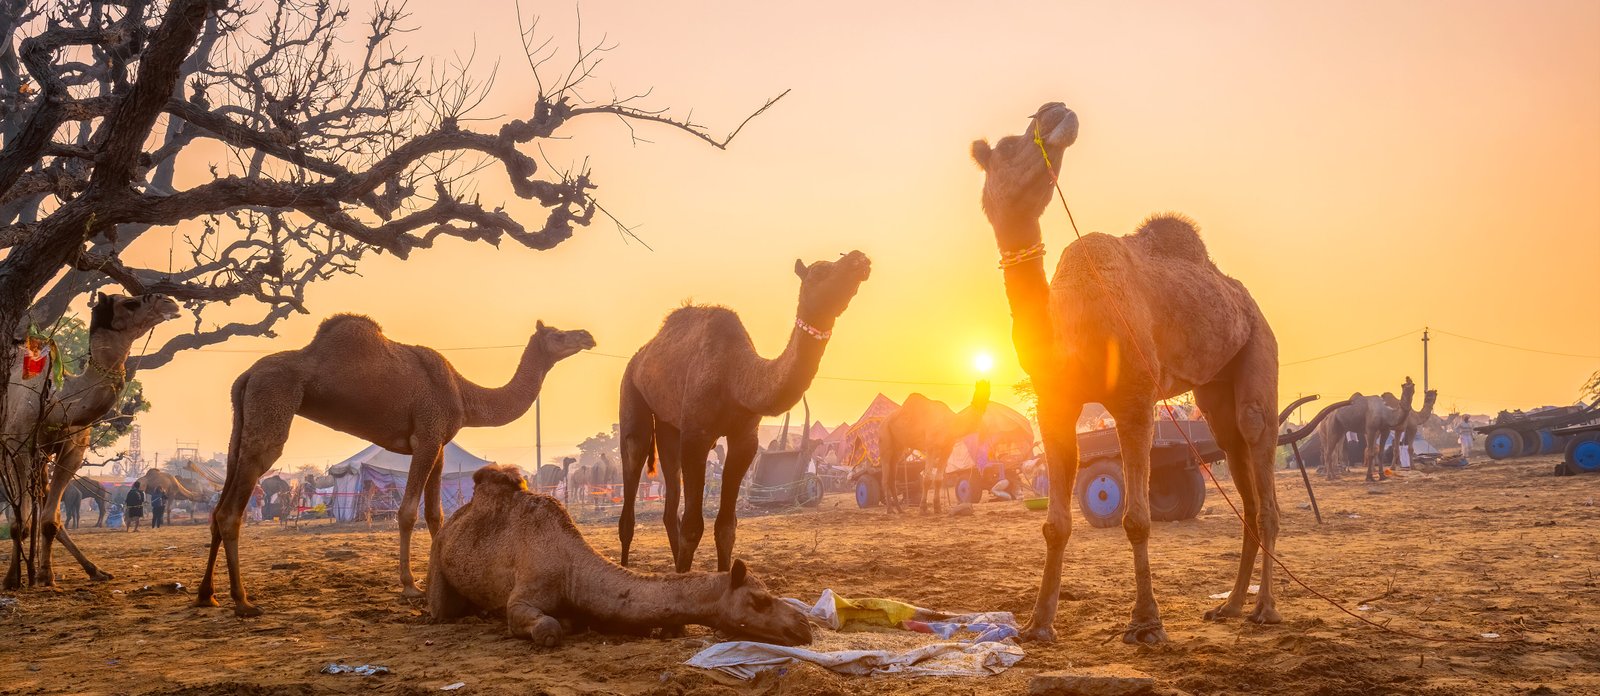 Pushkar mela camel fair festival in field eating chewing at sunset. Pushkar, Rajasthan, India